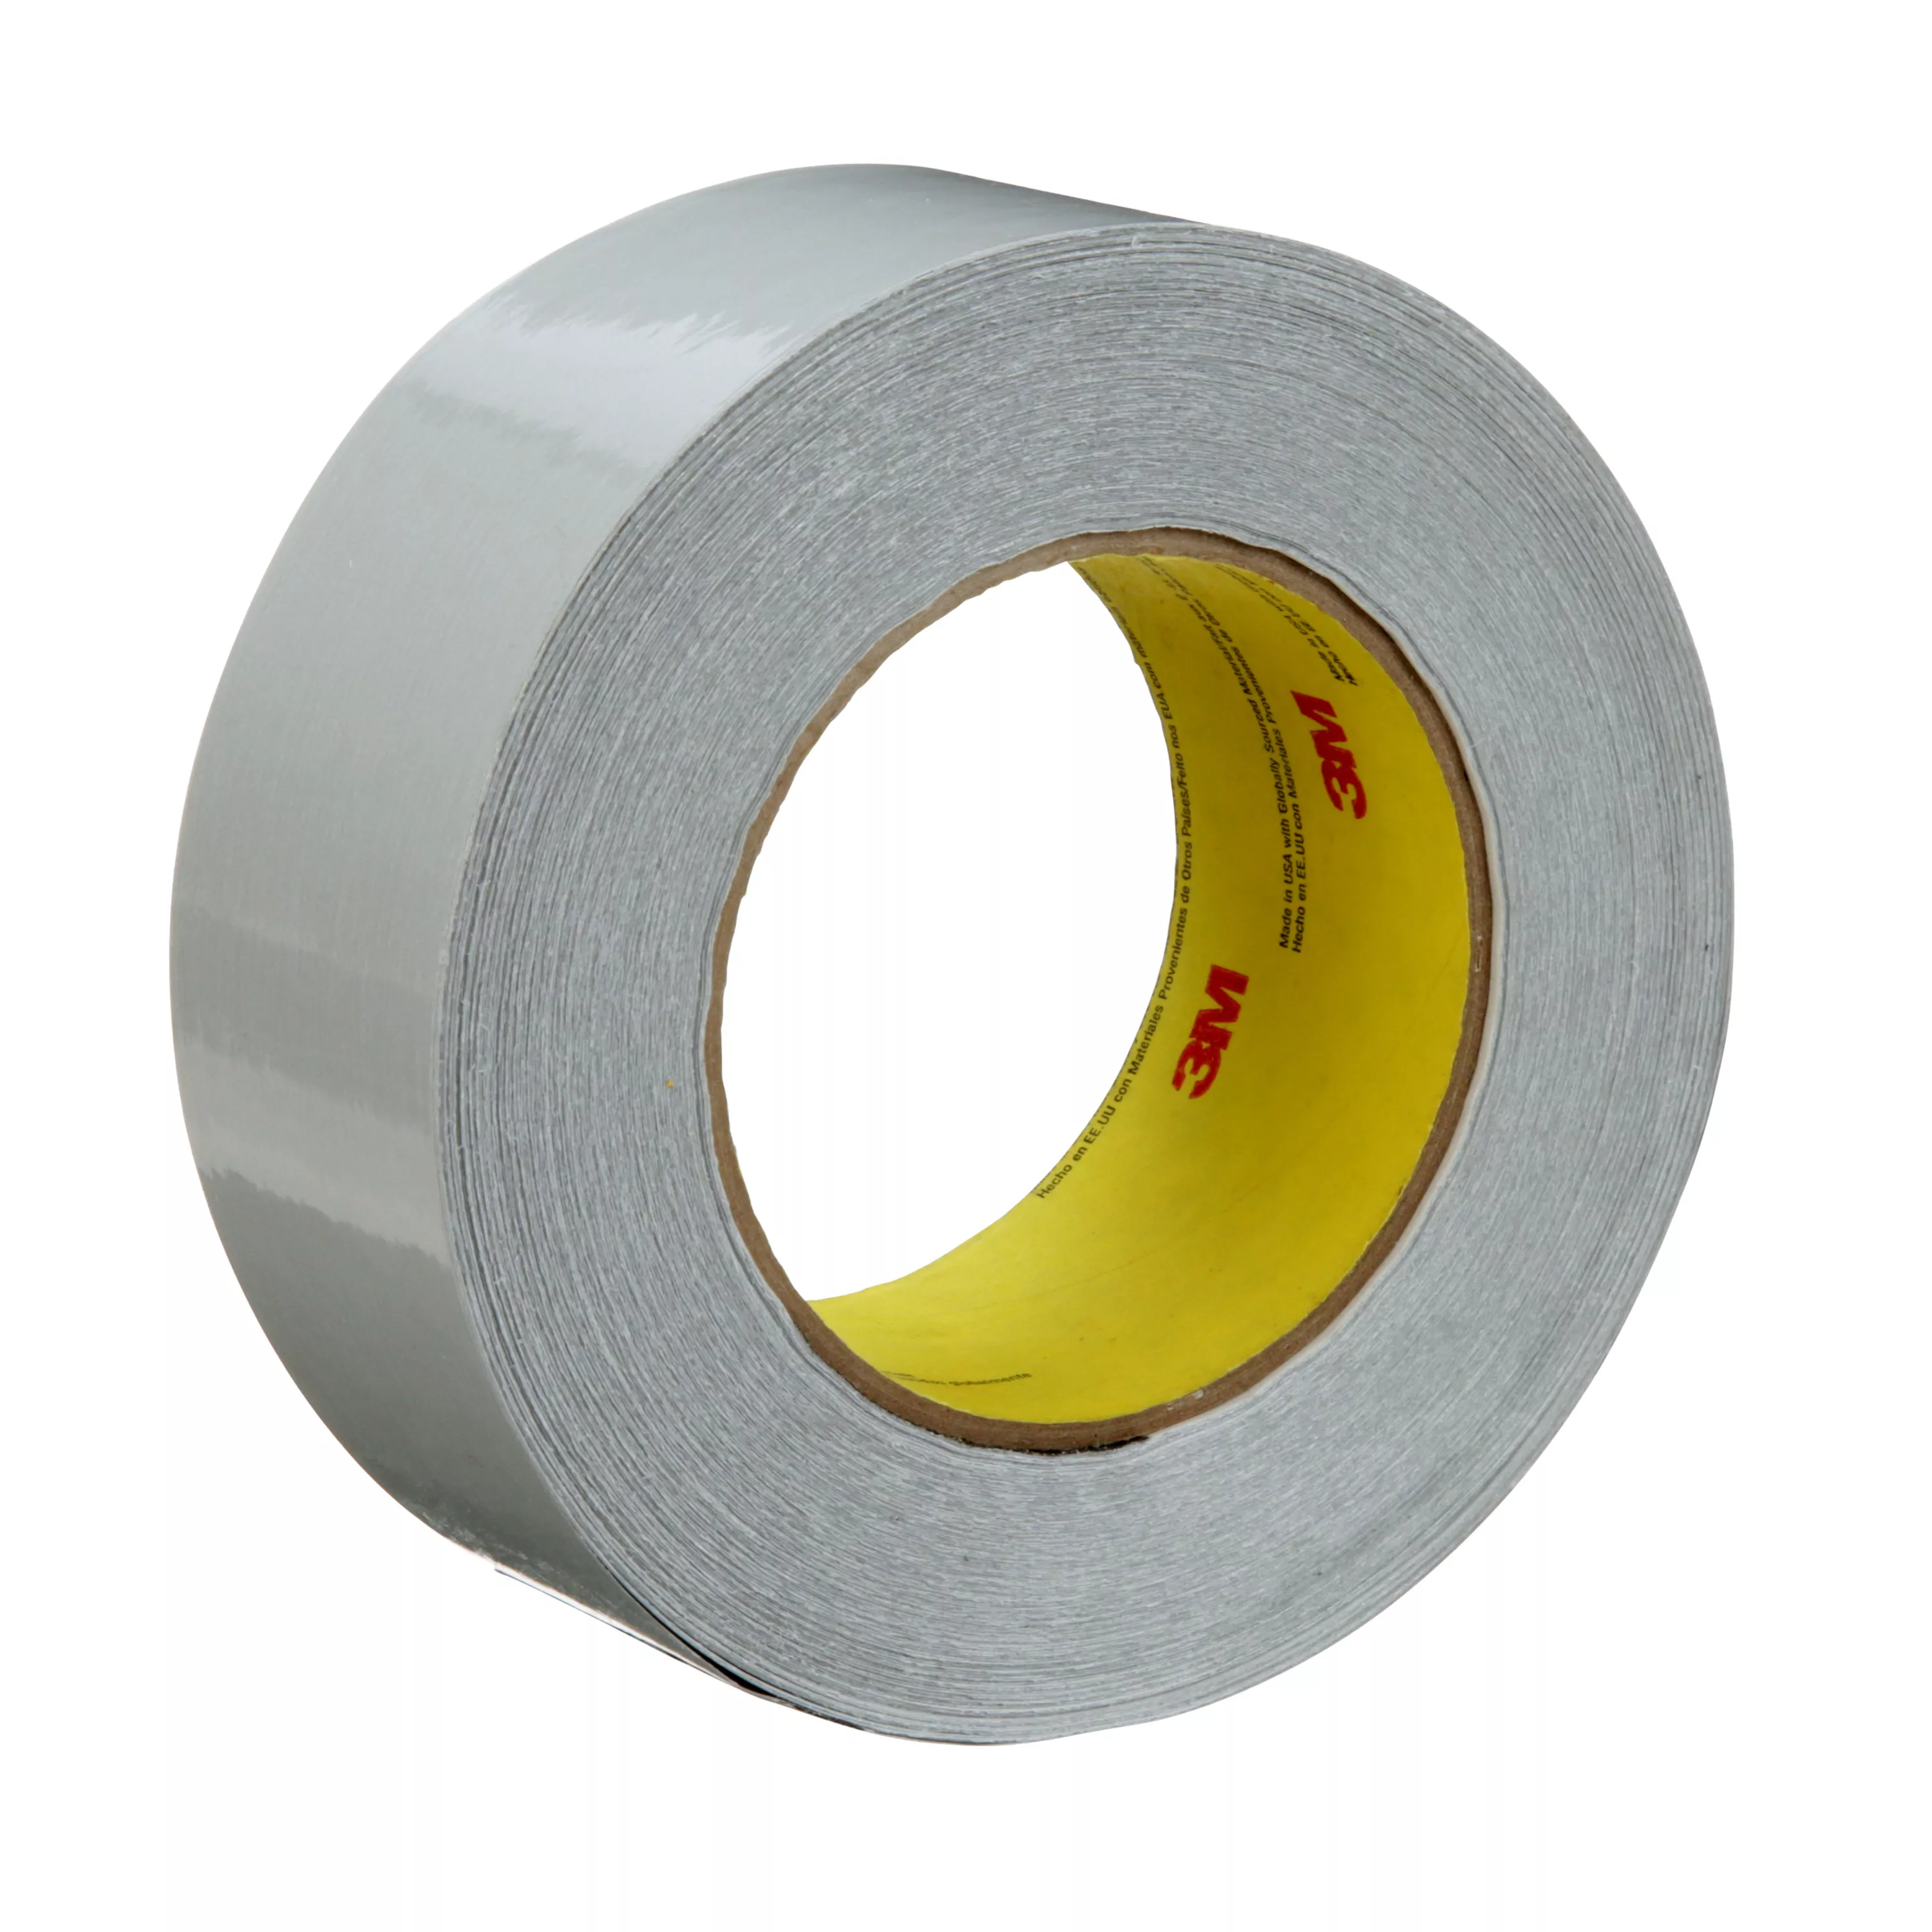 3M™ Venture Tape™ Cryogenic Vapor Barrier Tape 1555CW, Silver, 48 mm x
45.7 m, 24 Rolls/Case